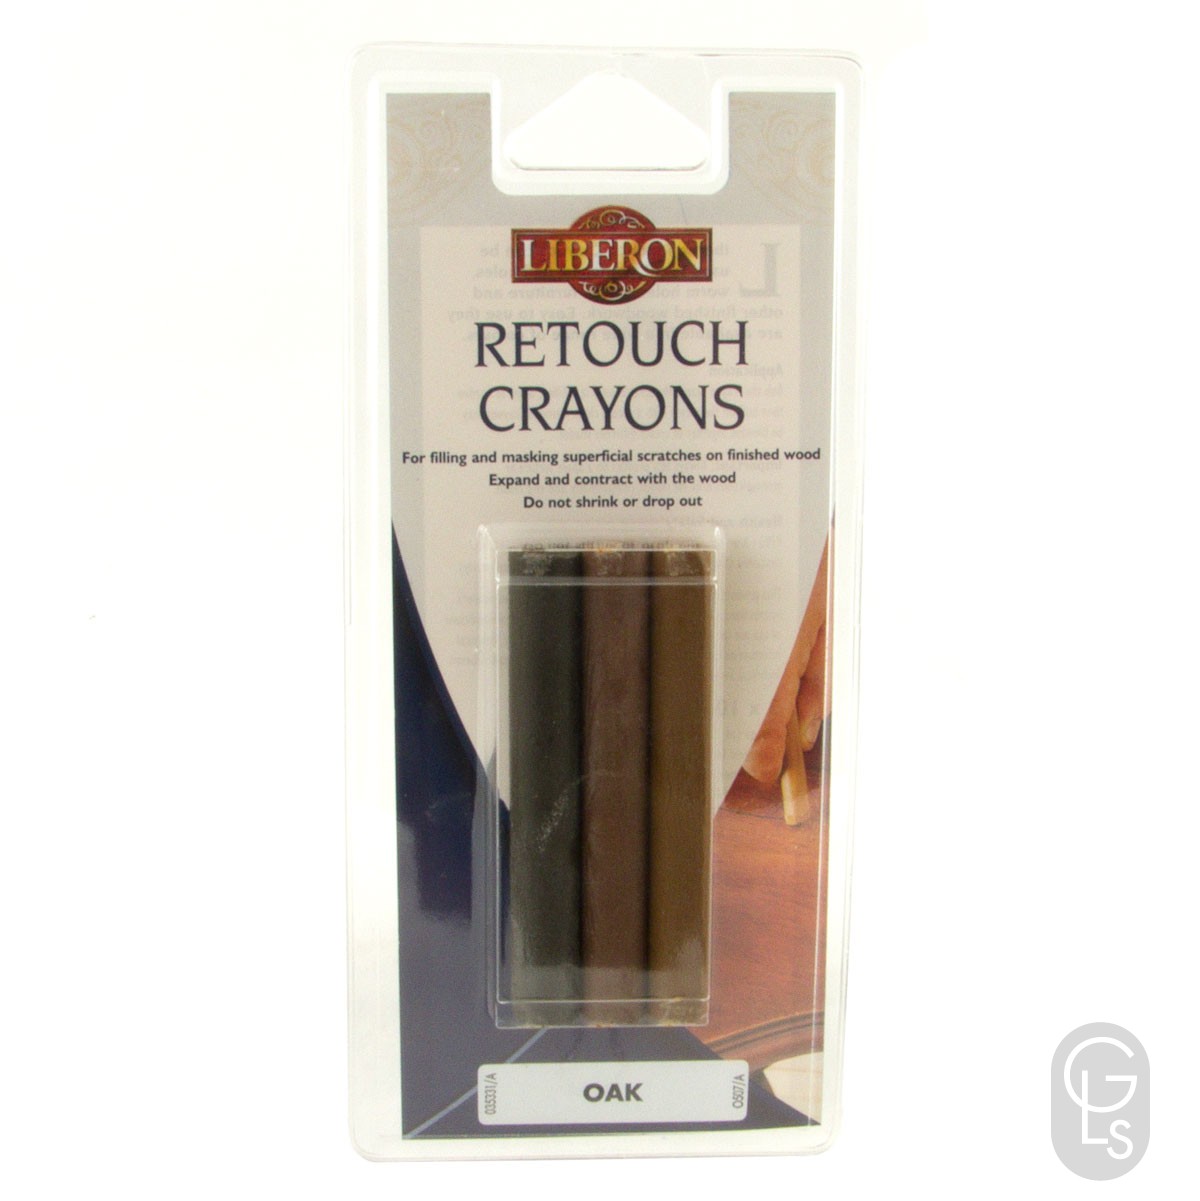 Liberon Retouch Crayons 3 Pack Oak